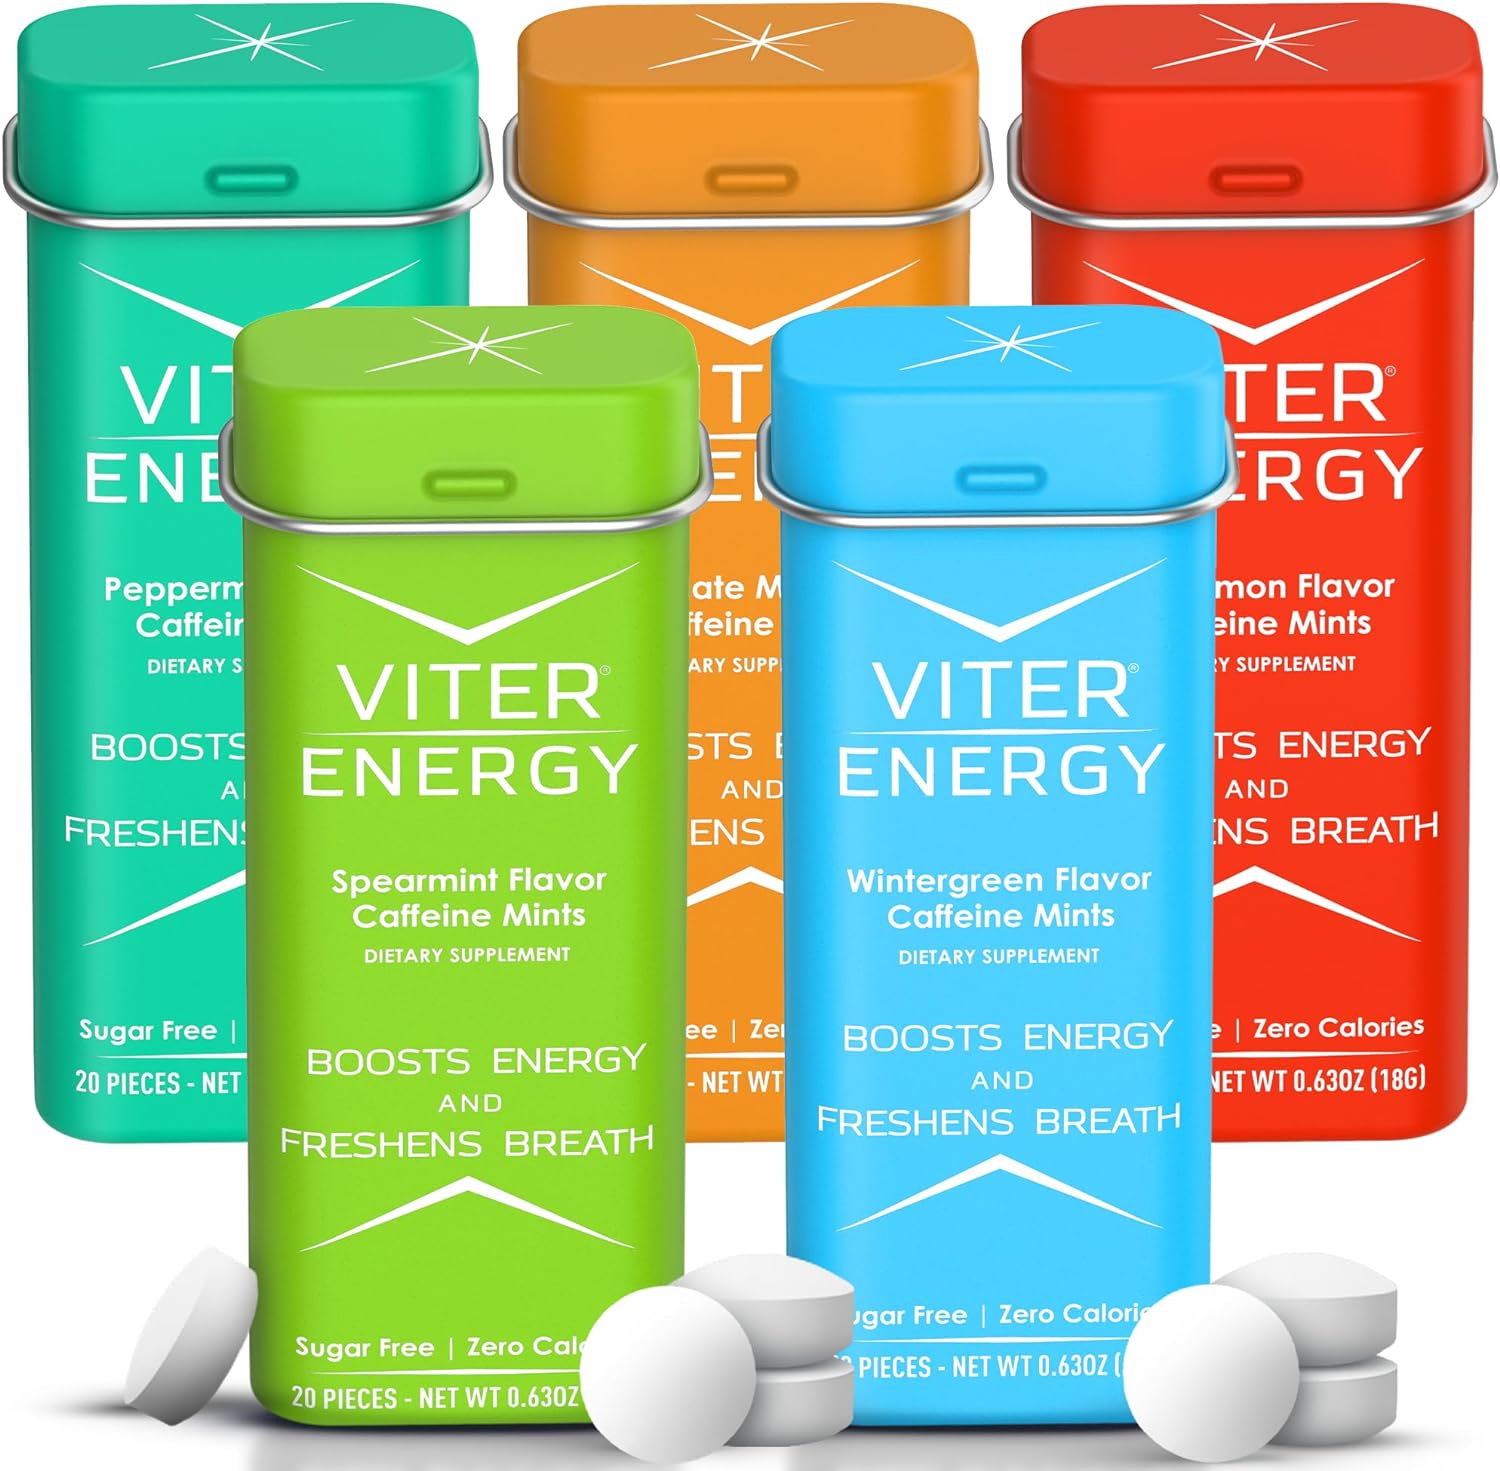 Viter Energy Caffeine Mints